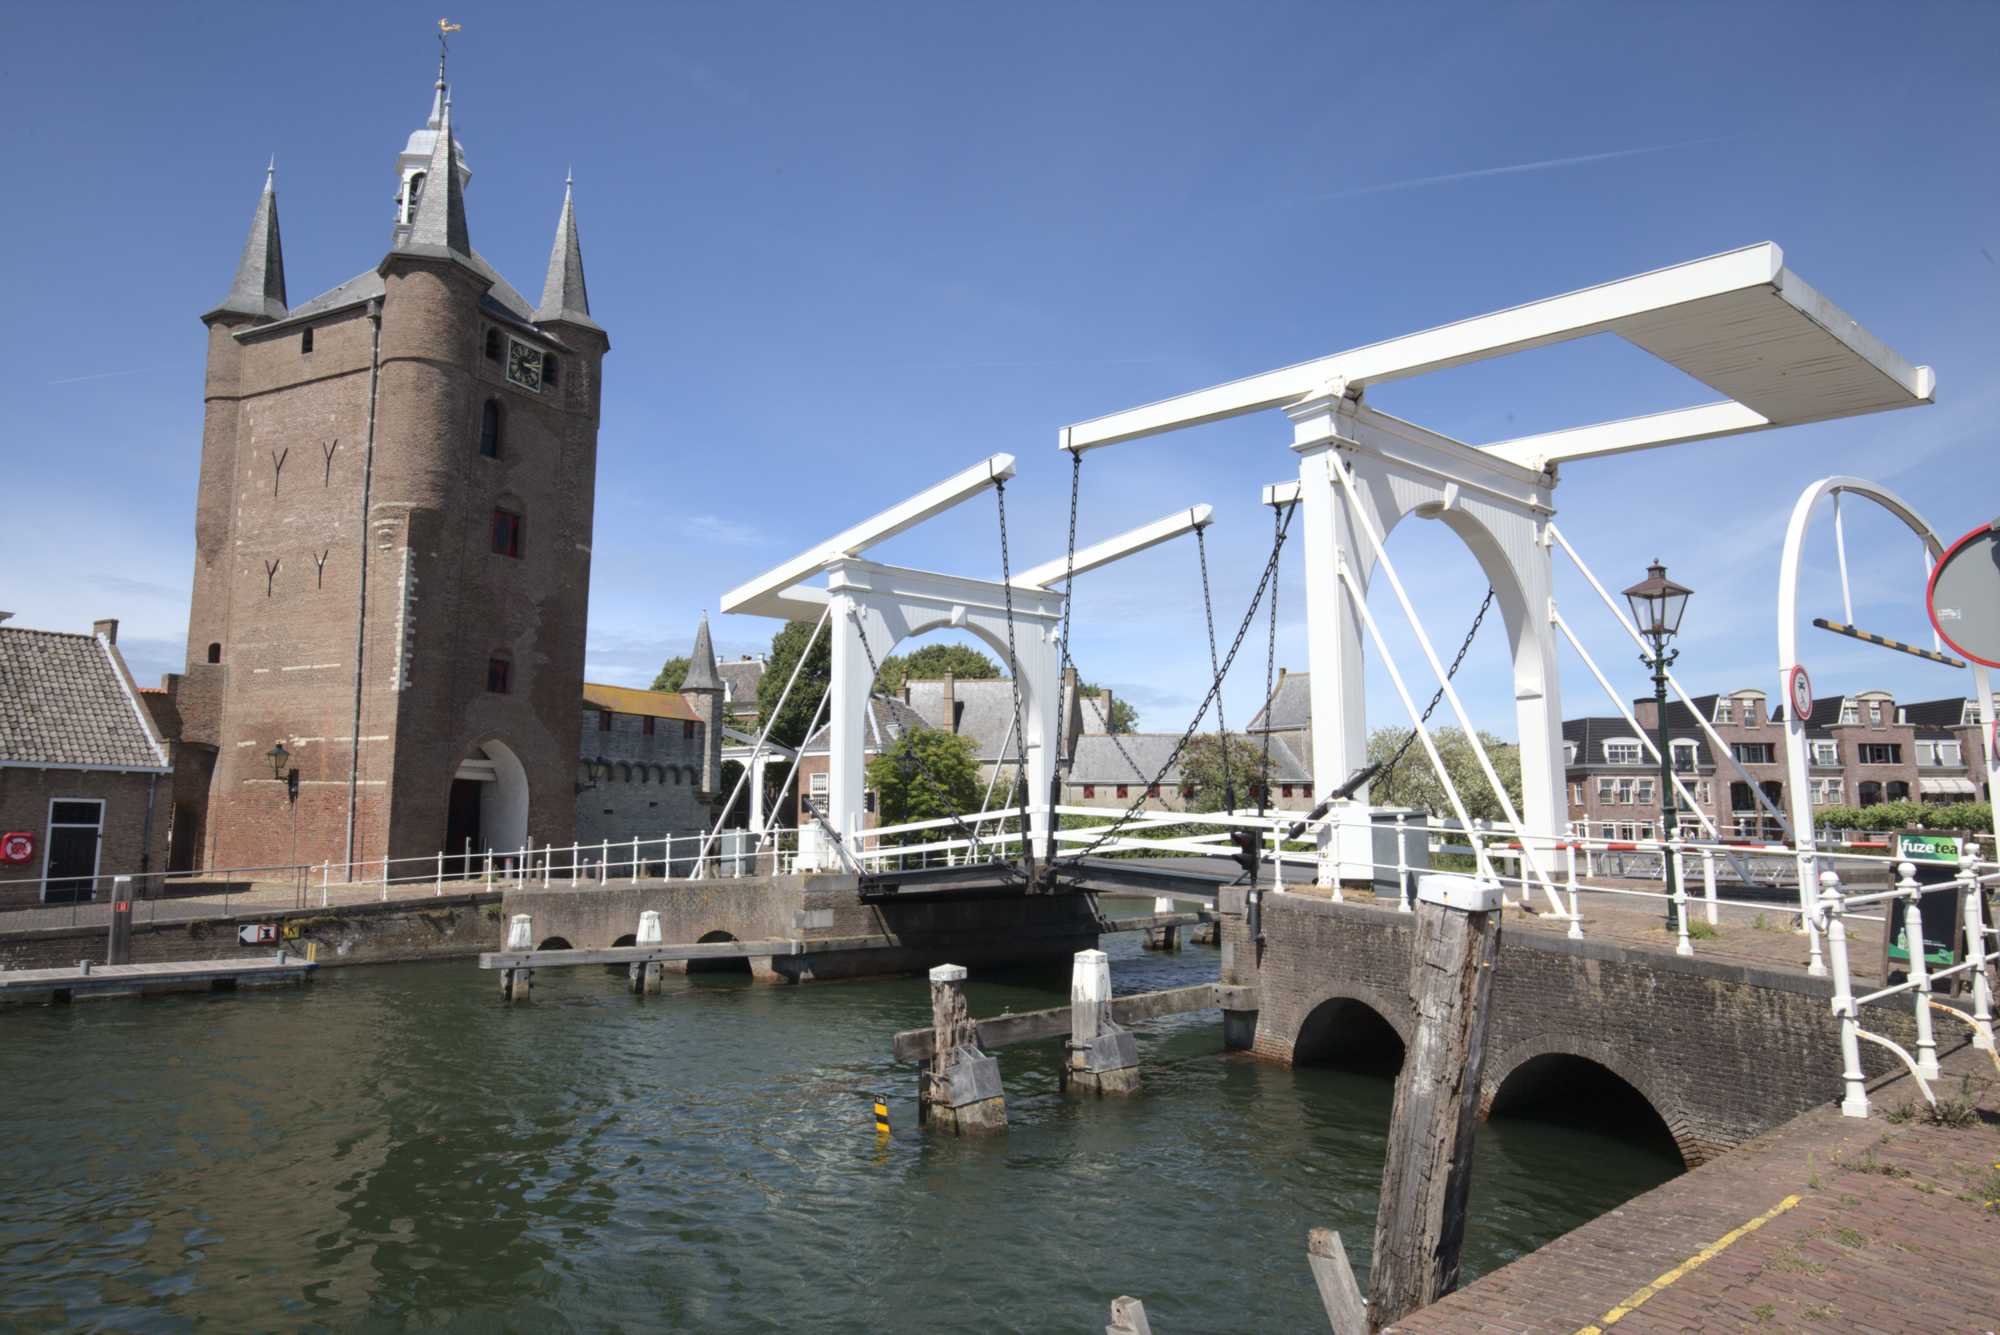 Lokation: Niederlande | Zeeland | Schouwen-Duiveland | Zierikzee Kategorien: Brücke, Datum: 03.07.2020